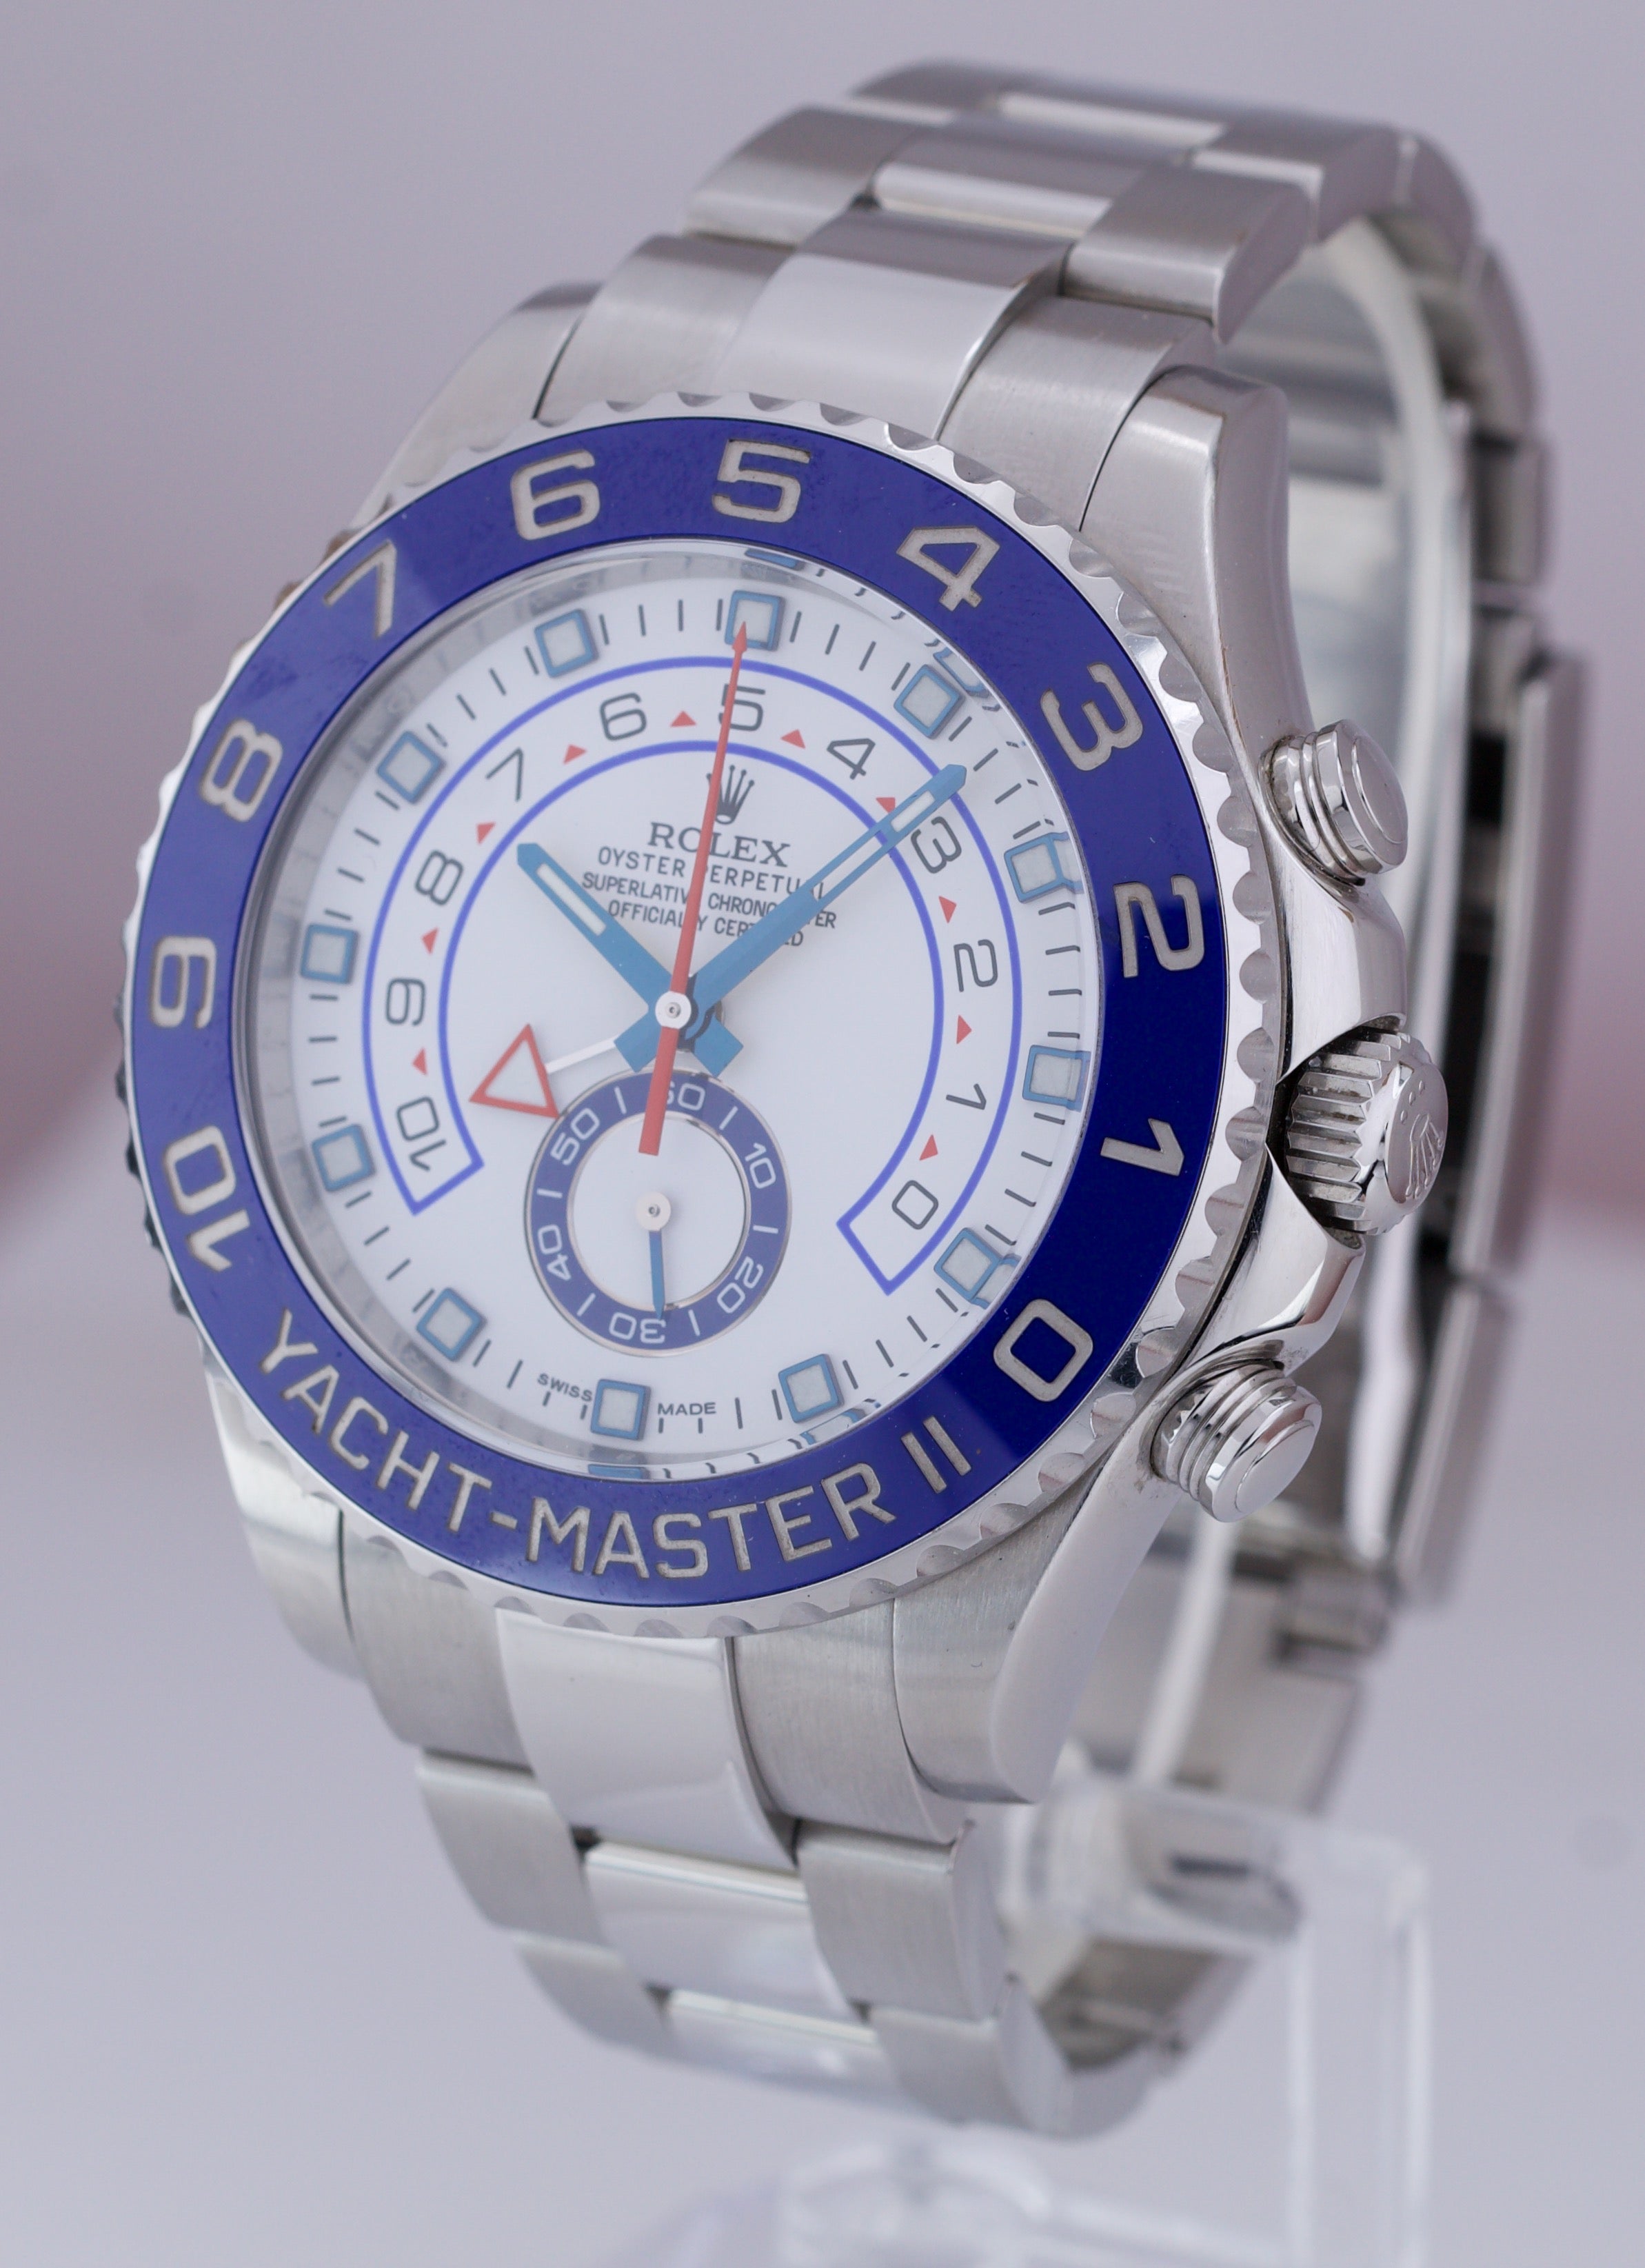 2016 Rolex Yacht-Master II 44mm Stainless White Blue Ceramic 116680 Watch B+P